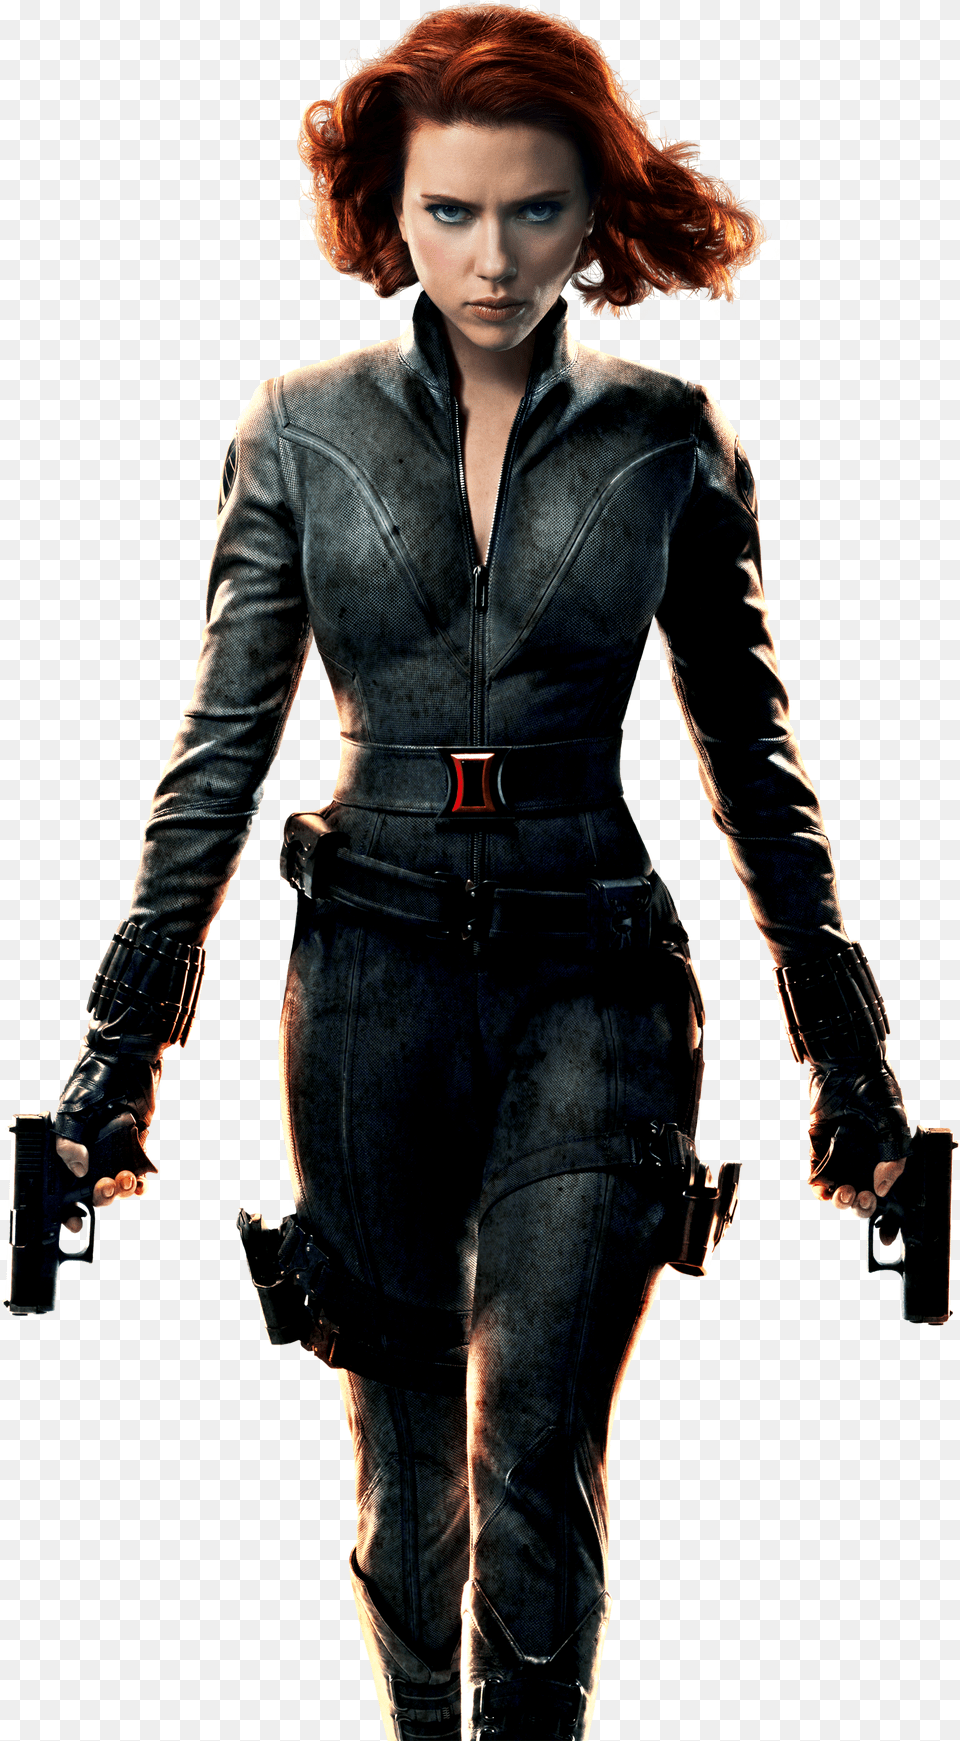 Johansson America Of Age Widow Avengers Black Widow, Symbol, Emblem, Device, Grass Png Image